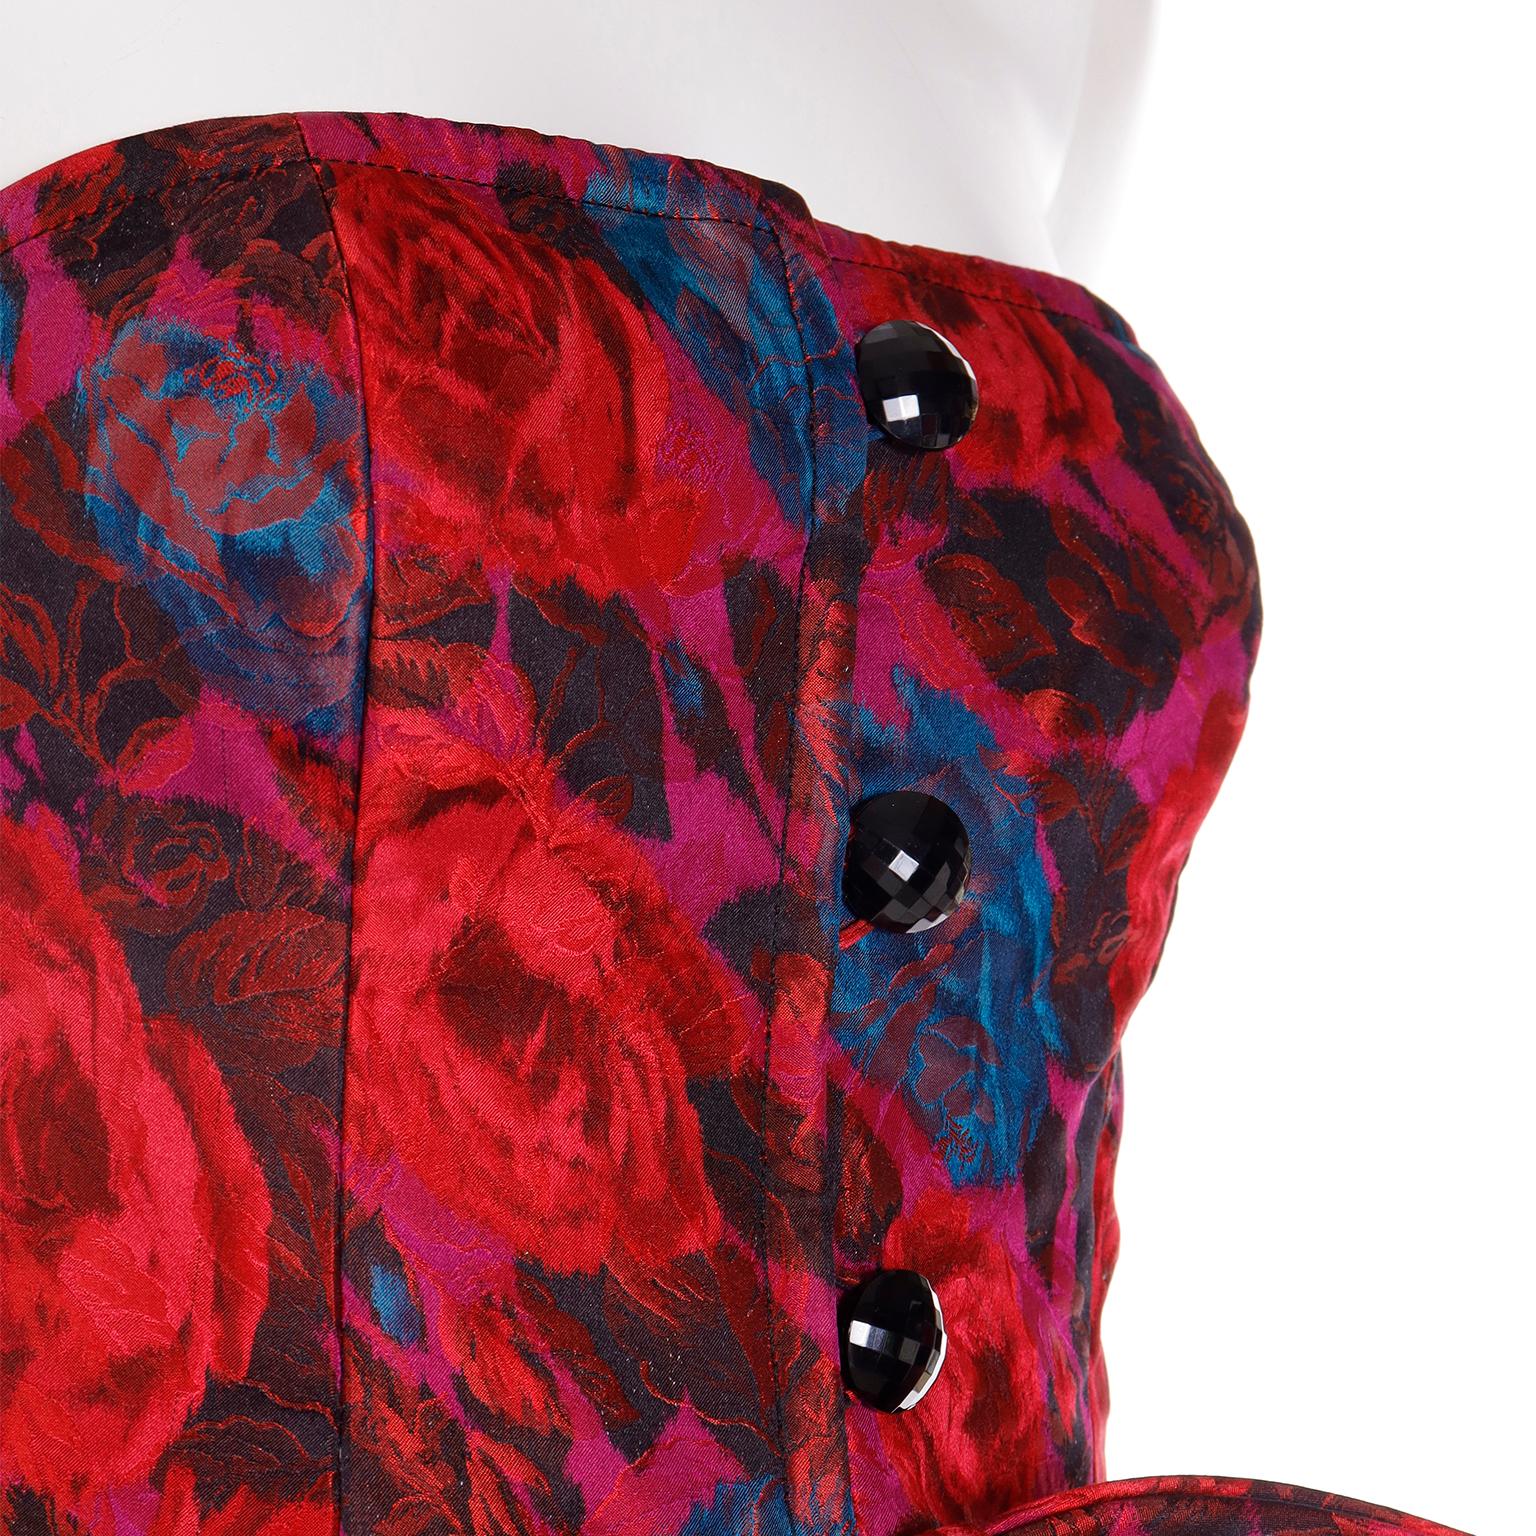 Odicini Couture Vintage Buntes trägerloses Vintage-Minikleid mit Blumenmuster in Rot, Lila & Blau im Angebot 5